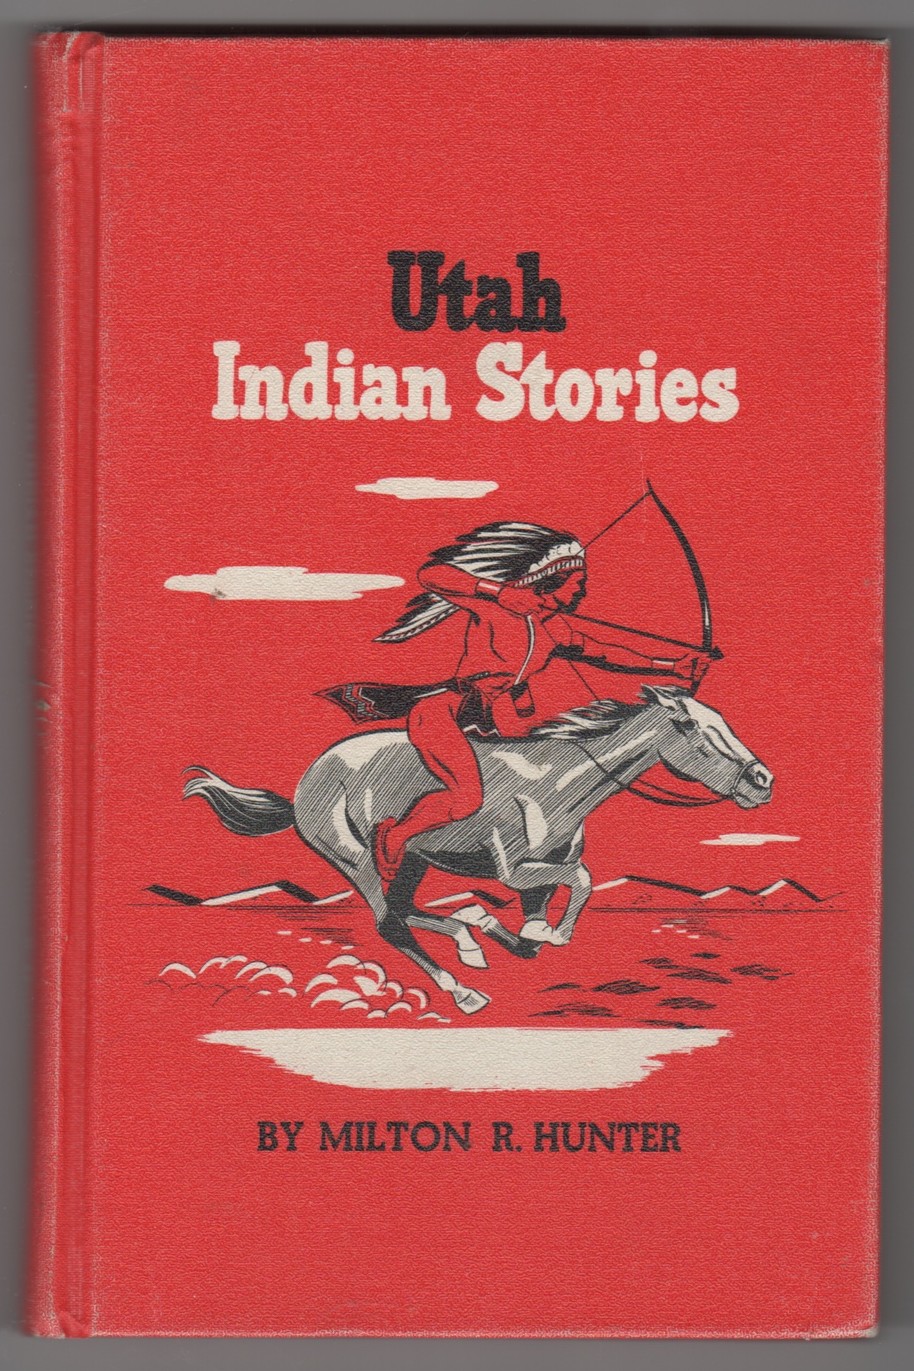 HUNTER, MILTON R. - Utah Indian Stories